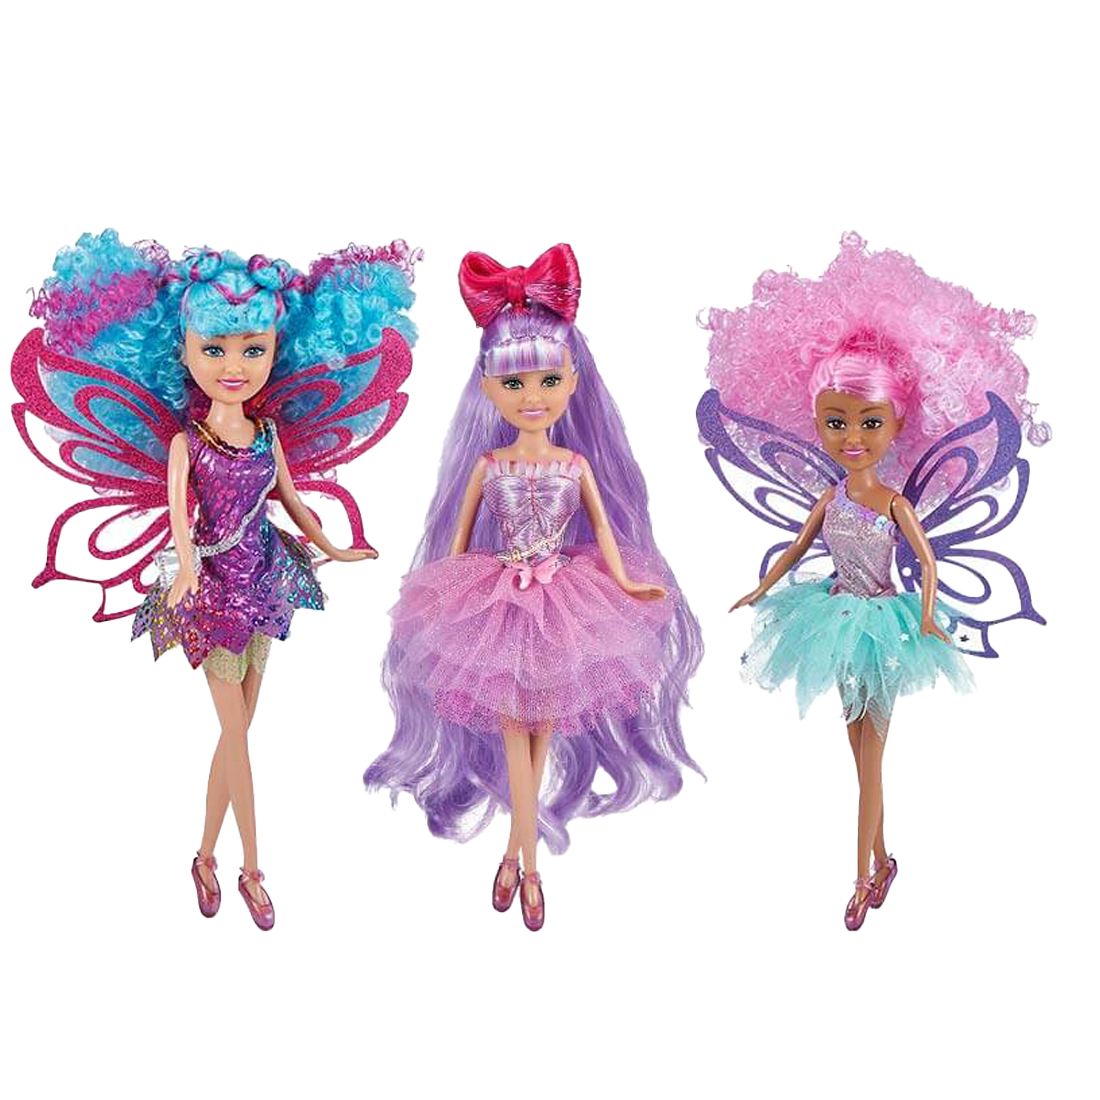 Sparkle Girlz Hair Dreams Fairy Doll by Zuru